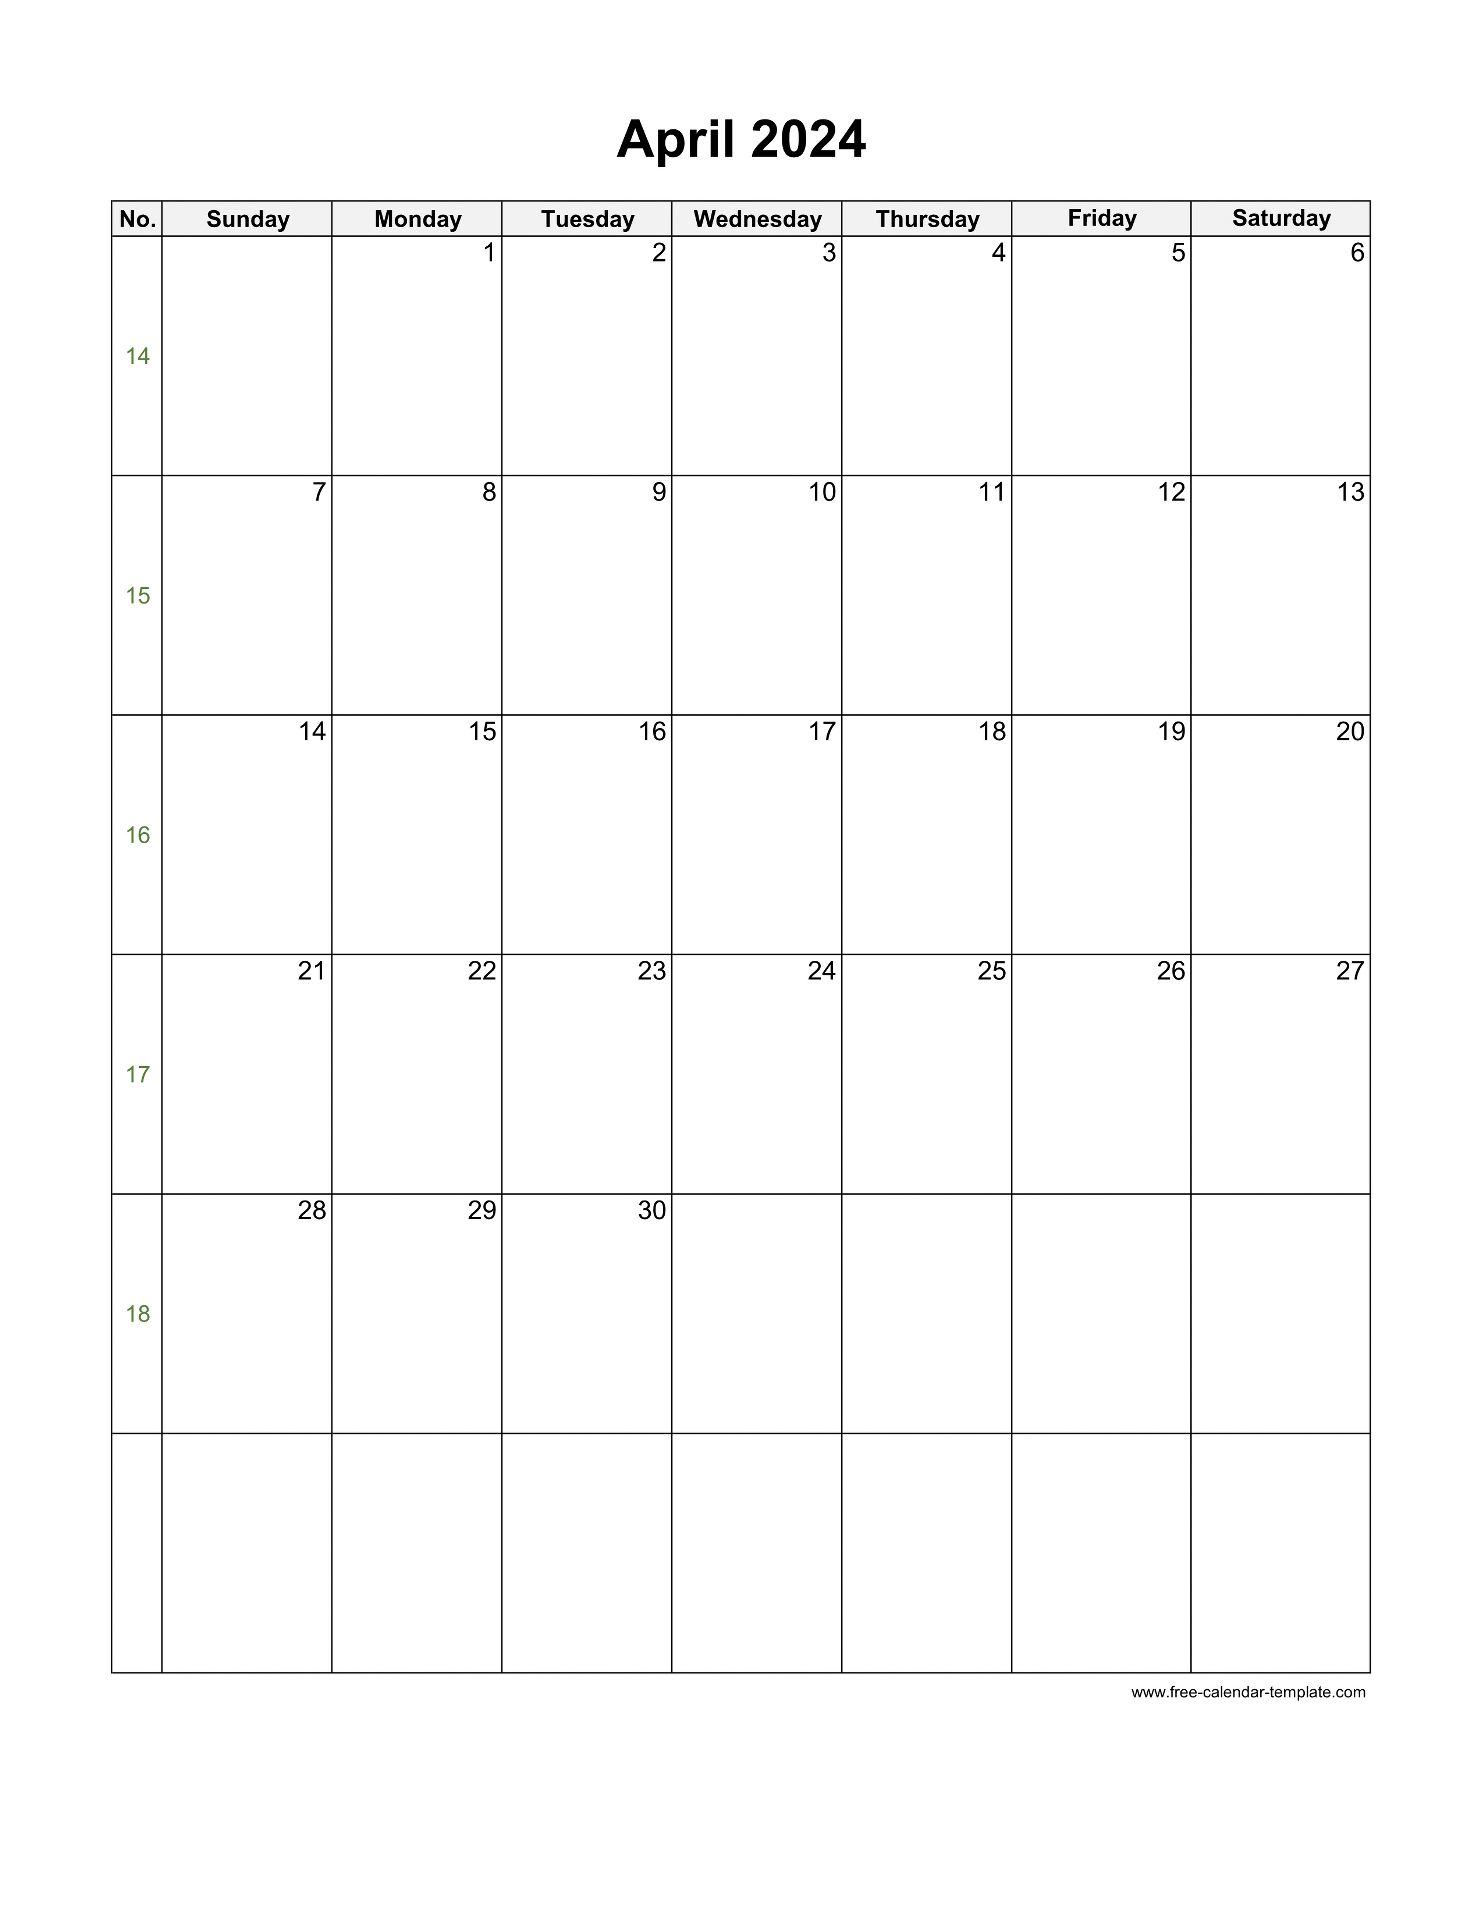 April 2024 Calendar Template Word Free Debbi Ethelda